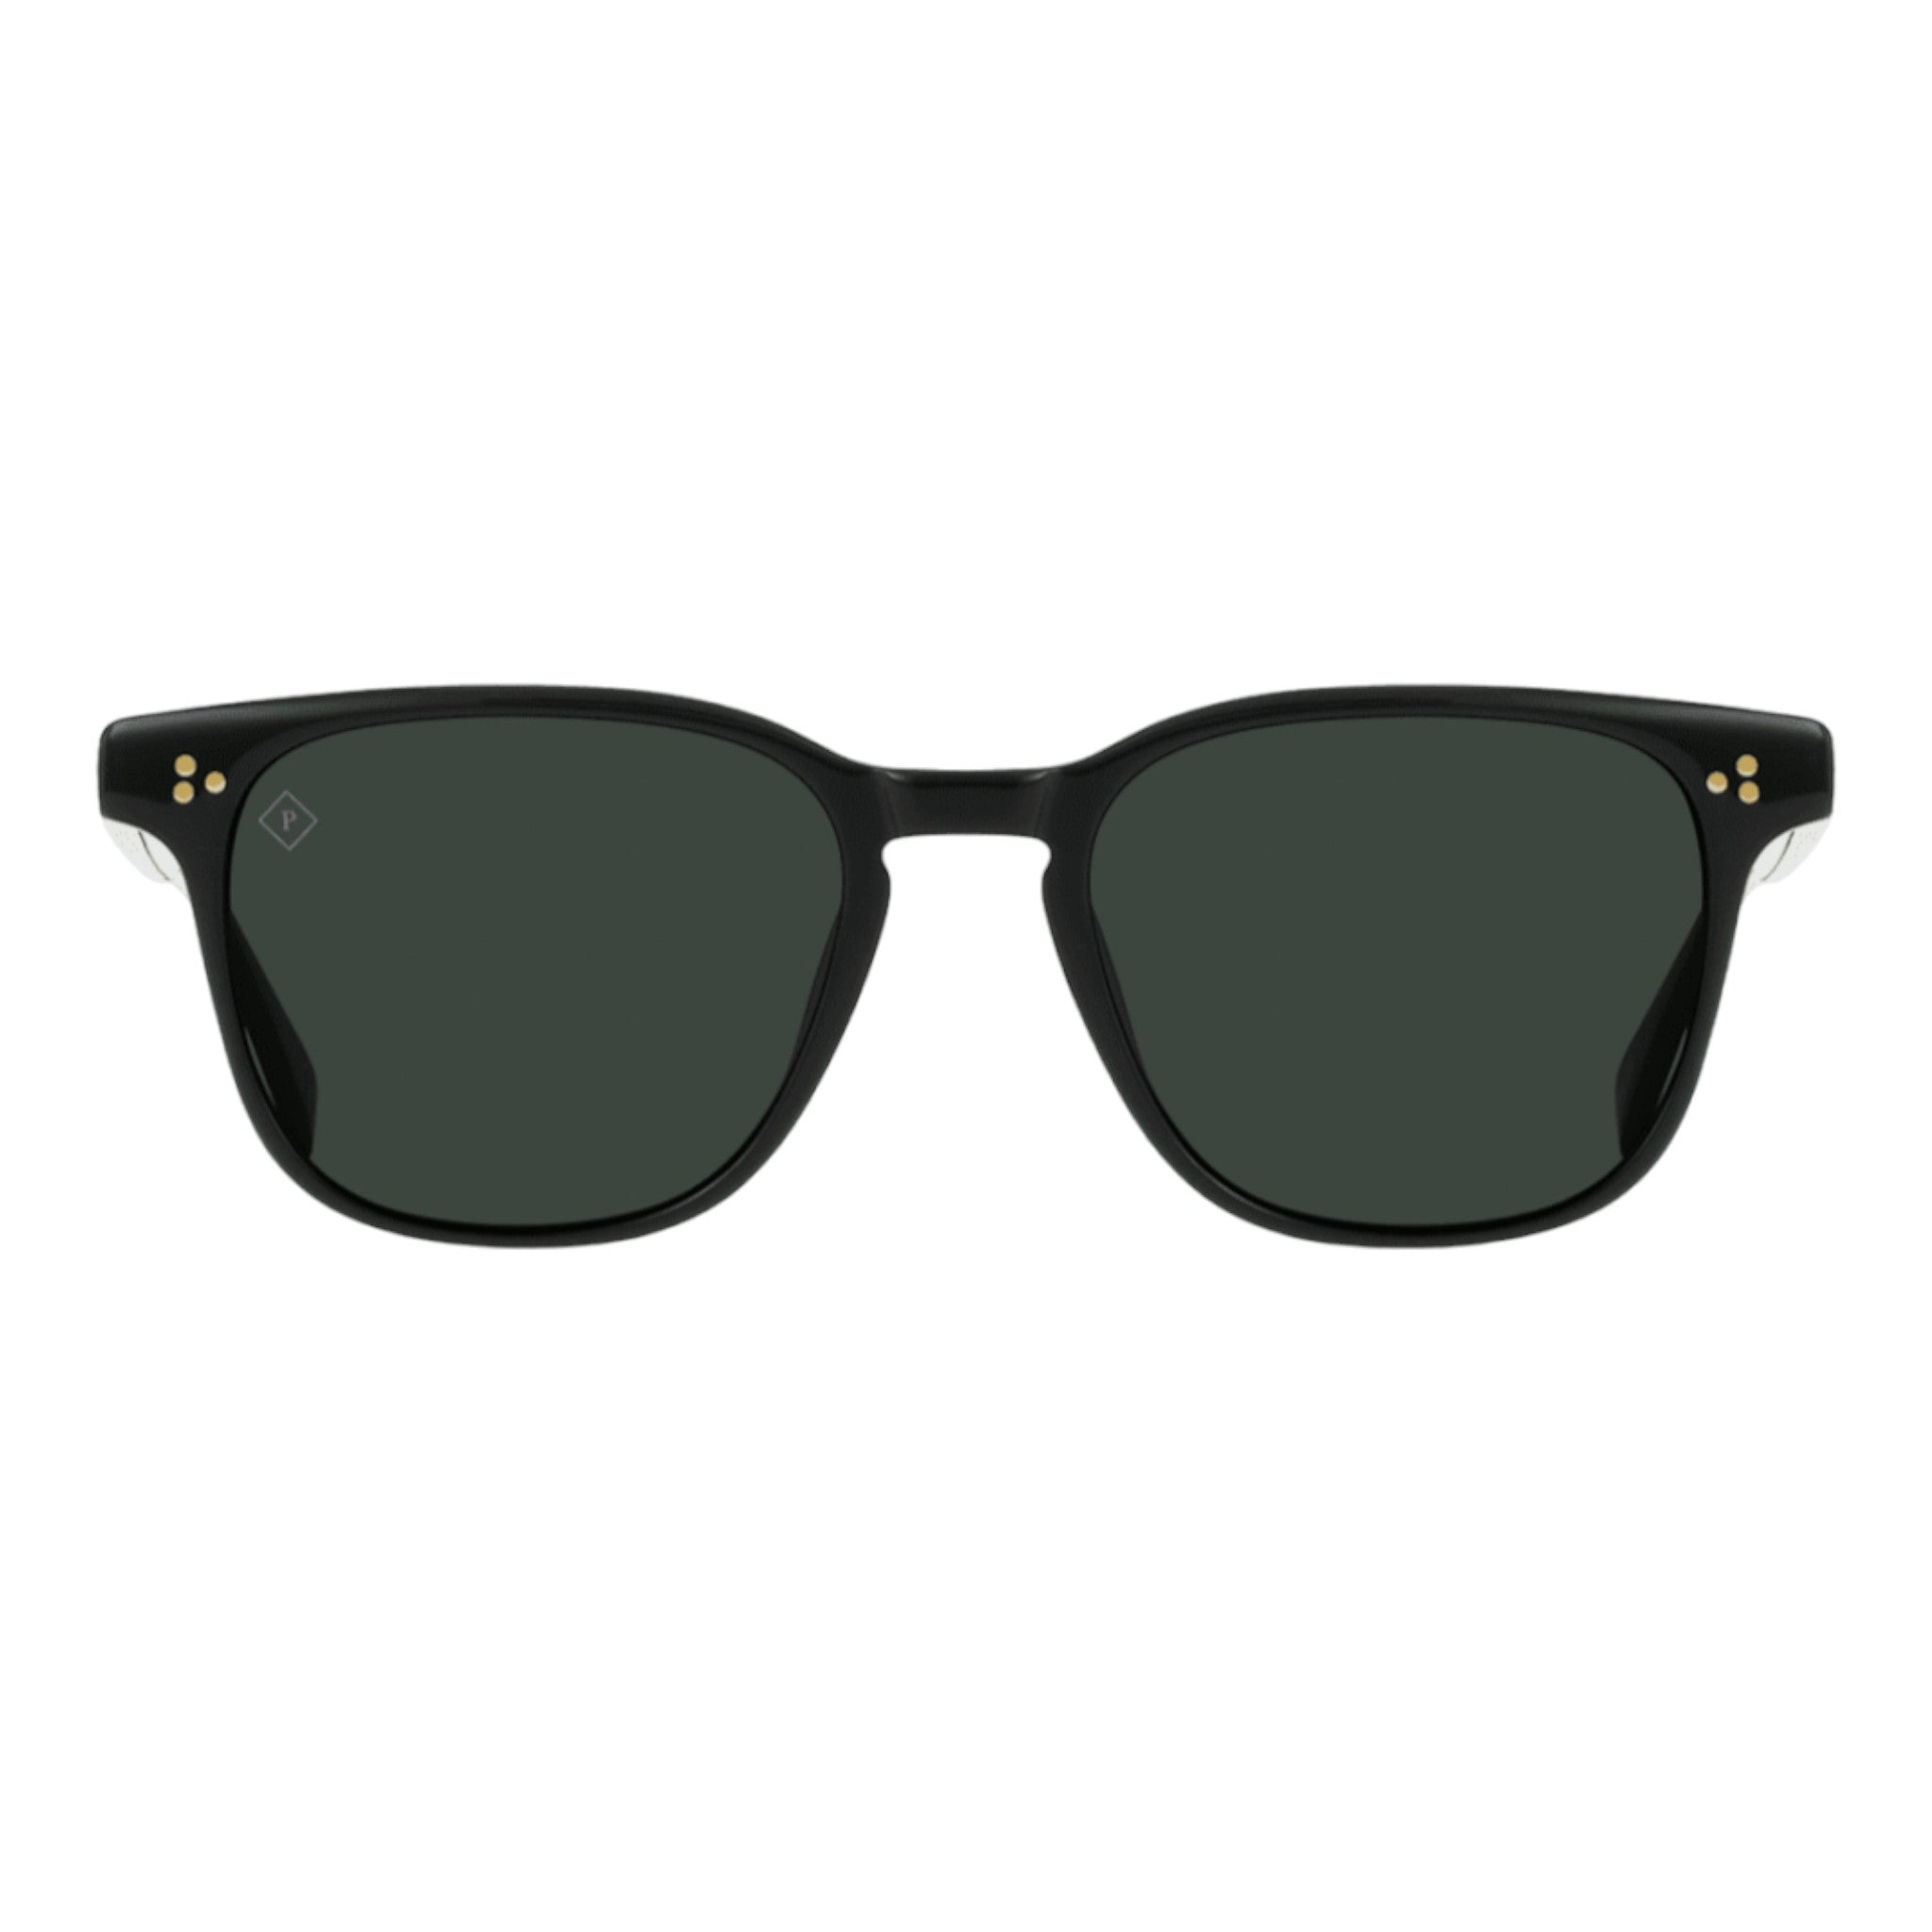 Raen -  Alvez 50 Sunglasses - Recycled Black / Green Polarized